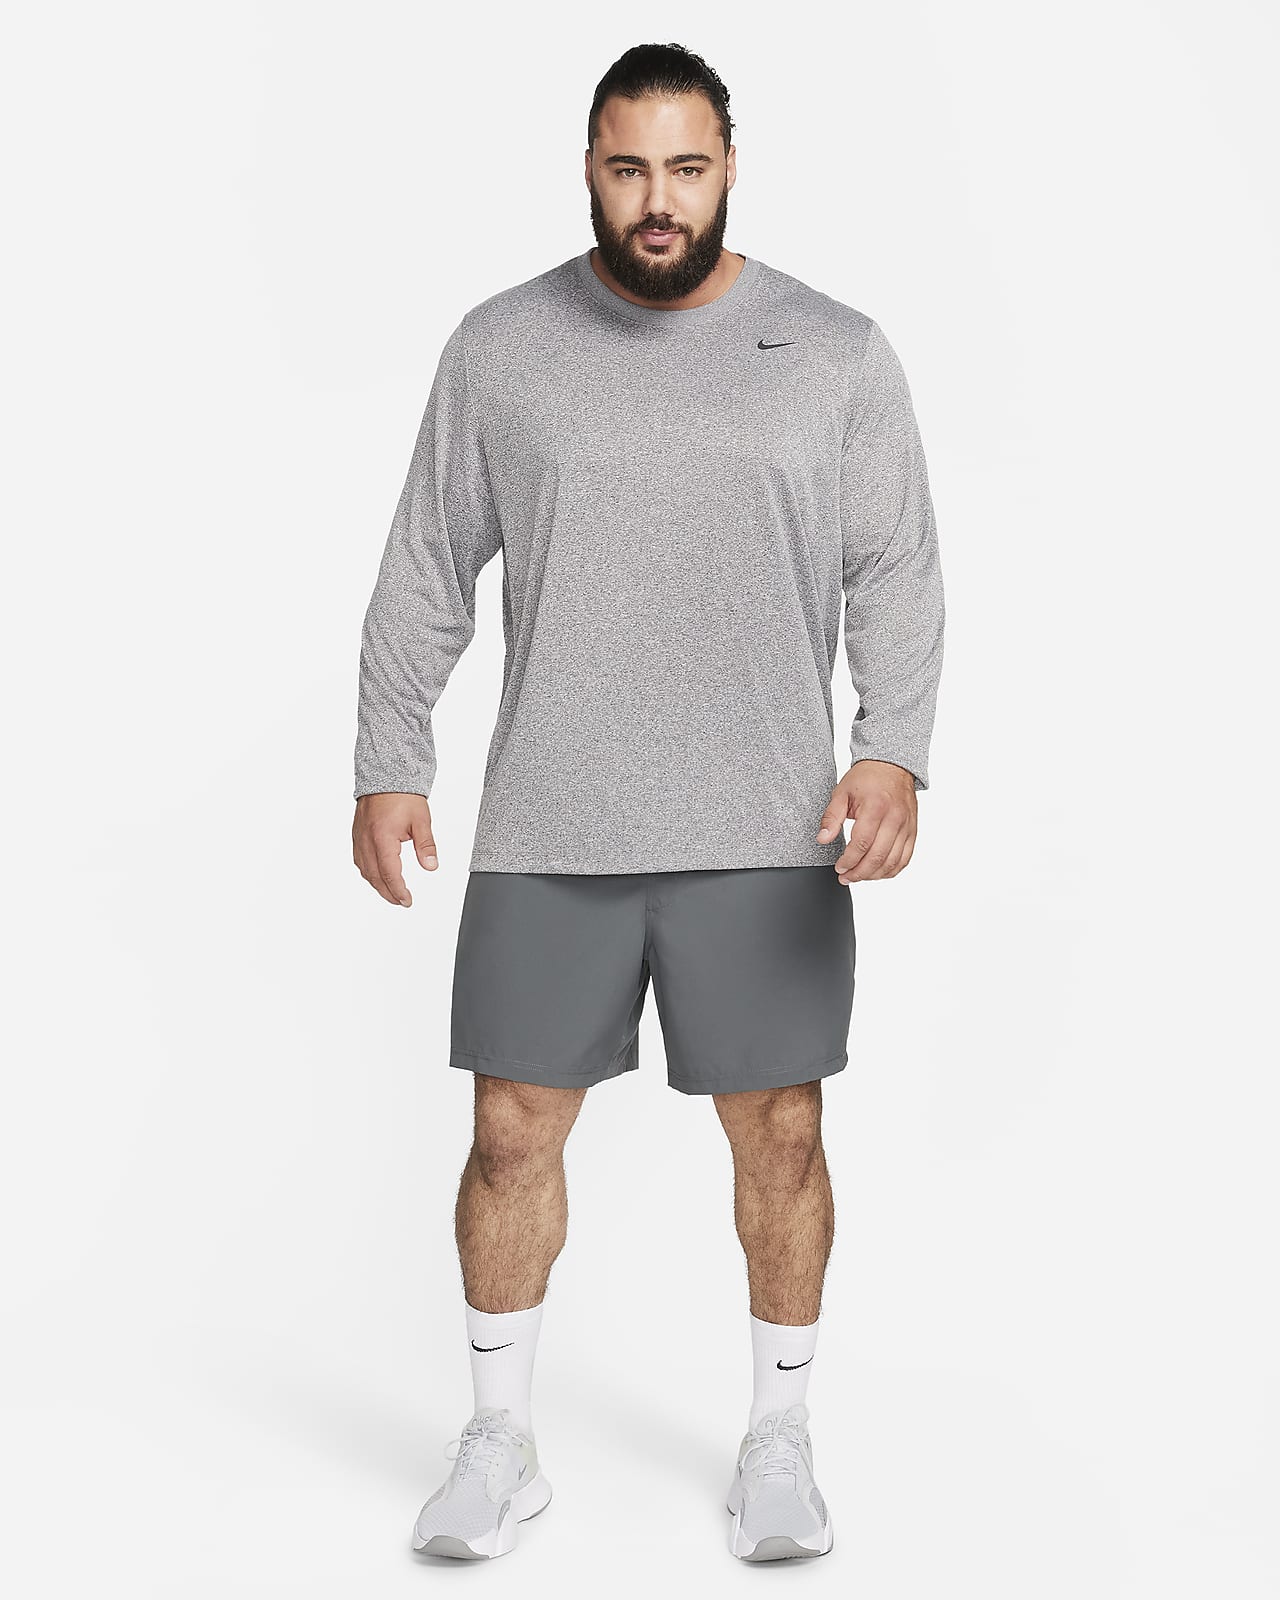 Nike Dri-FIT Legend Long-Sleeve Fitness Top.